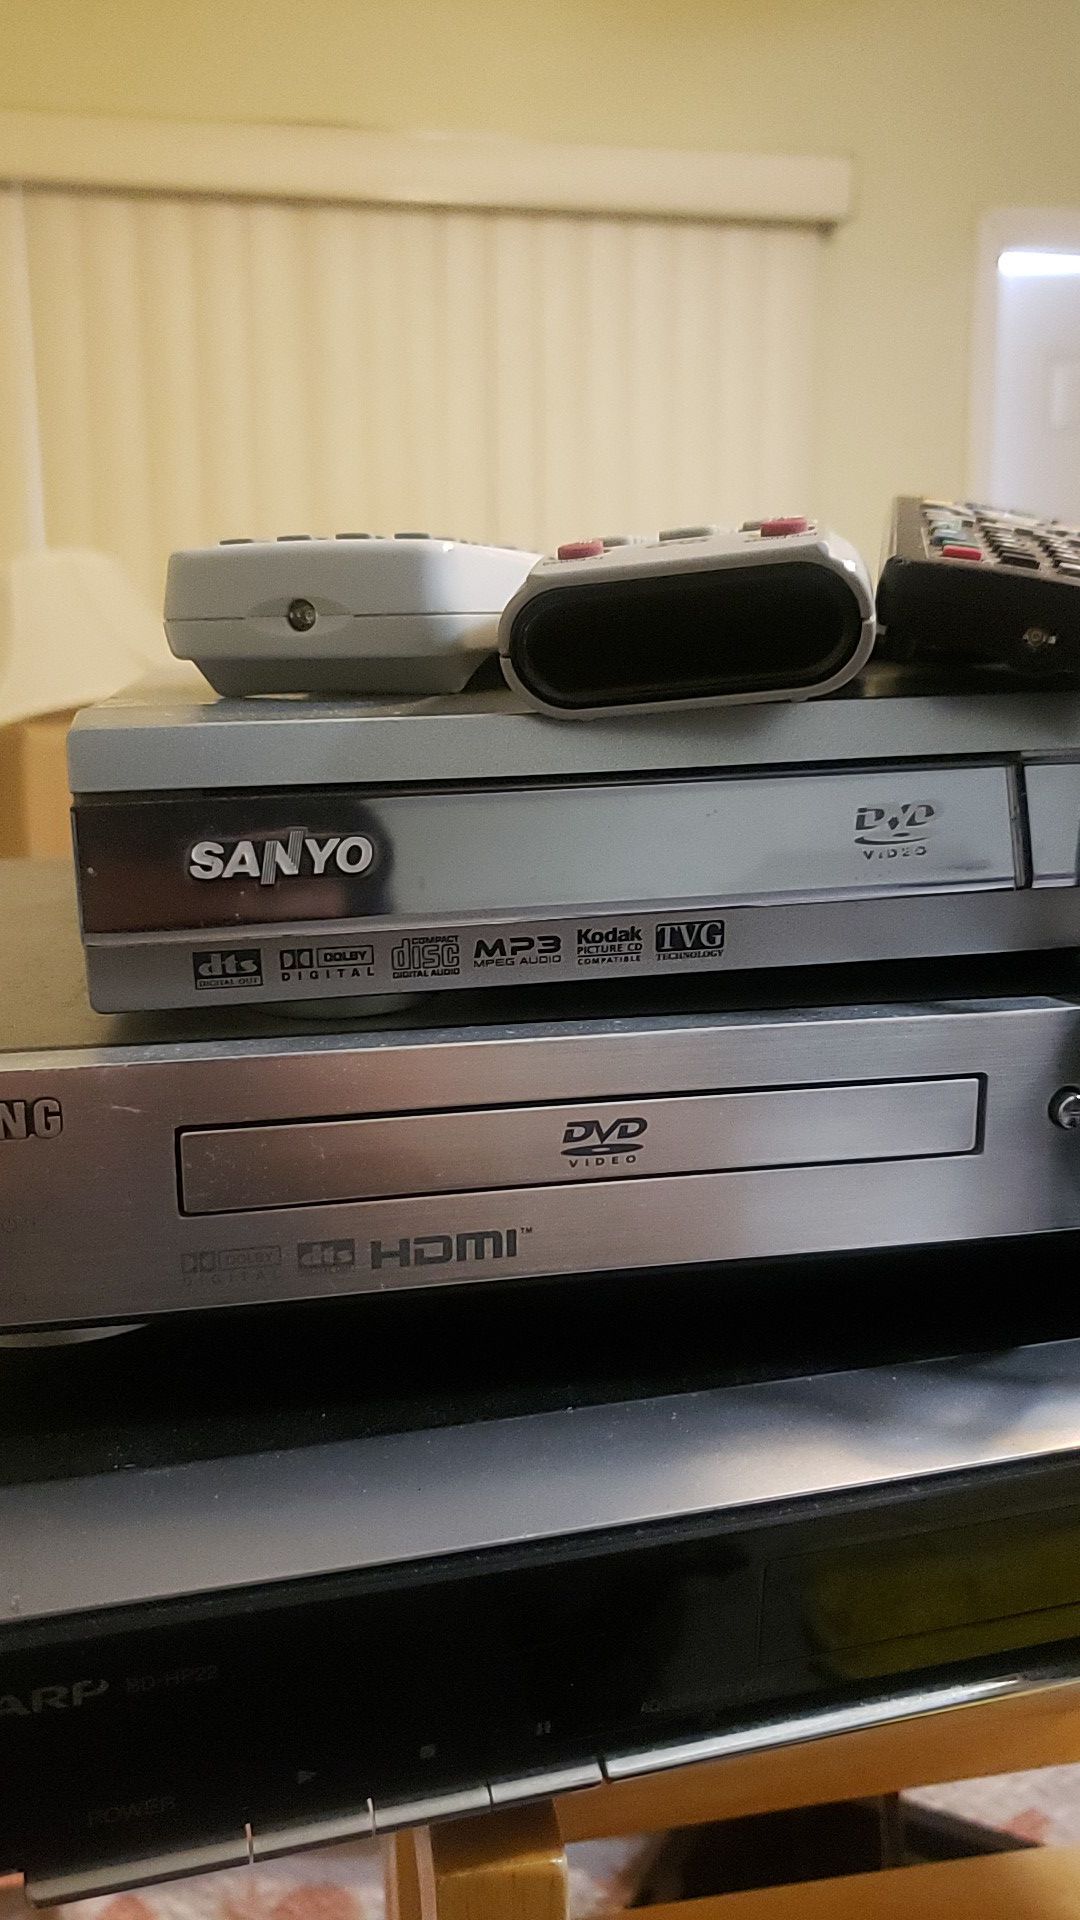 Blu-ray sharp, 2 DVD player samsung, sanyo